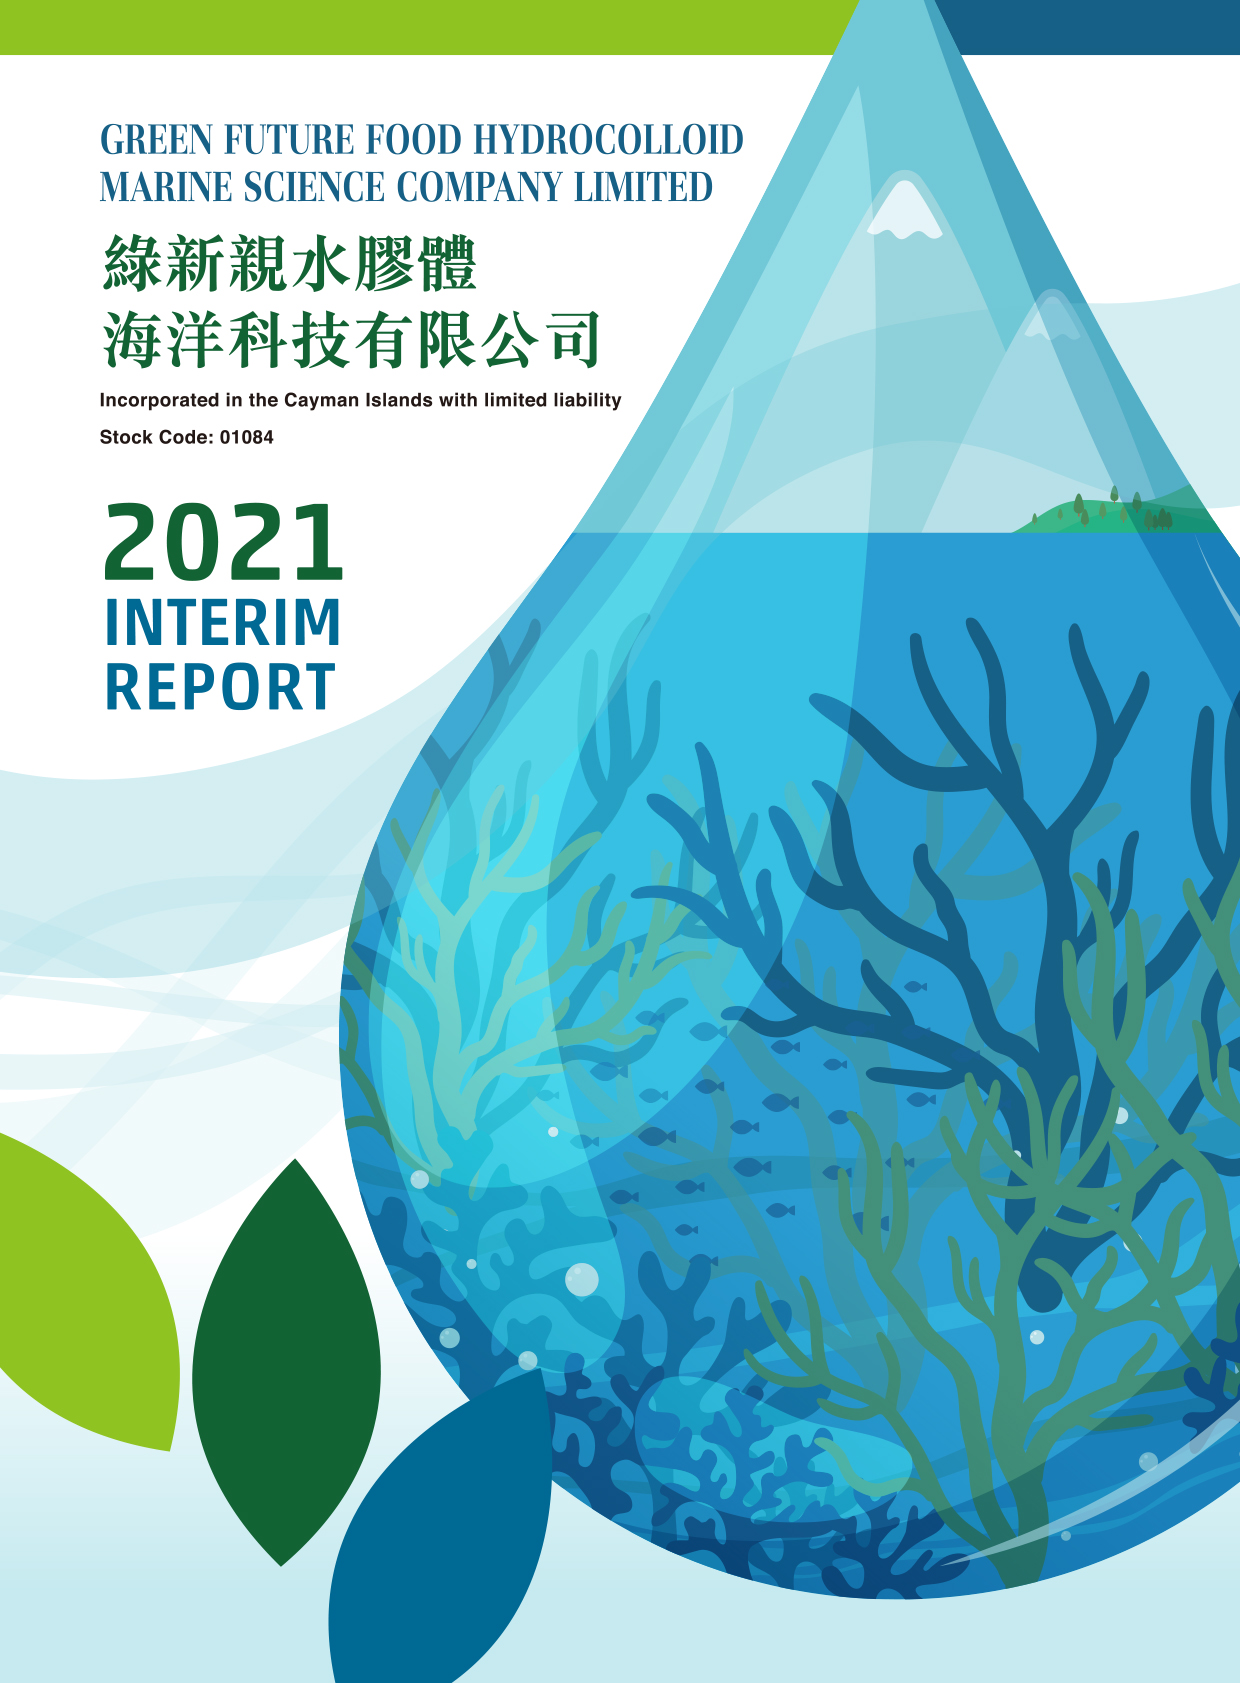 Green Future Food Hydrocolloid Marine Science Company Limited